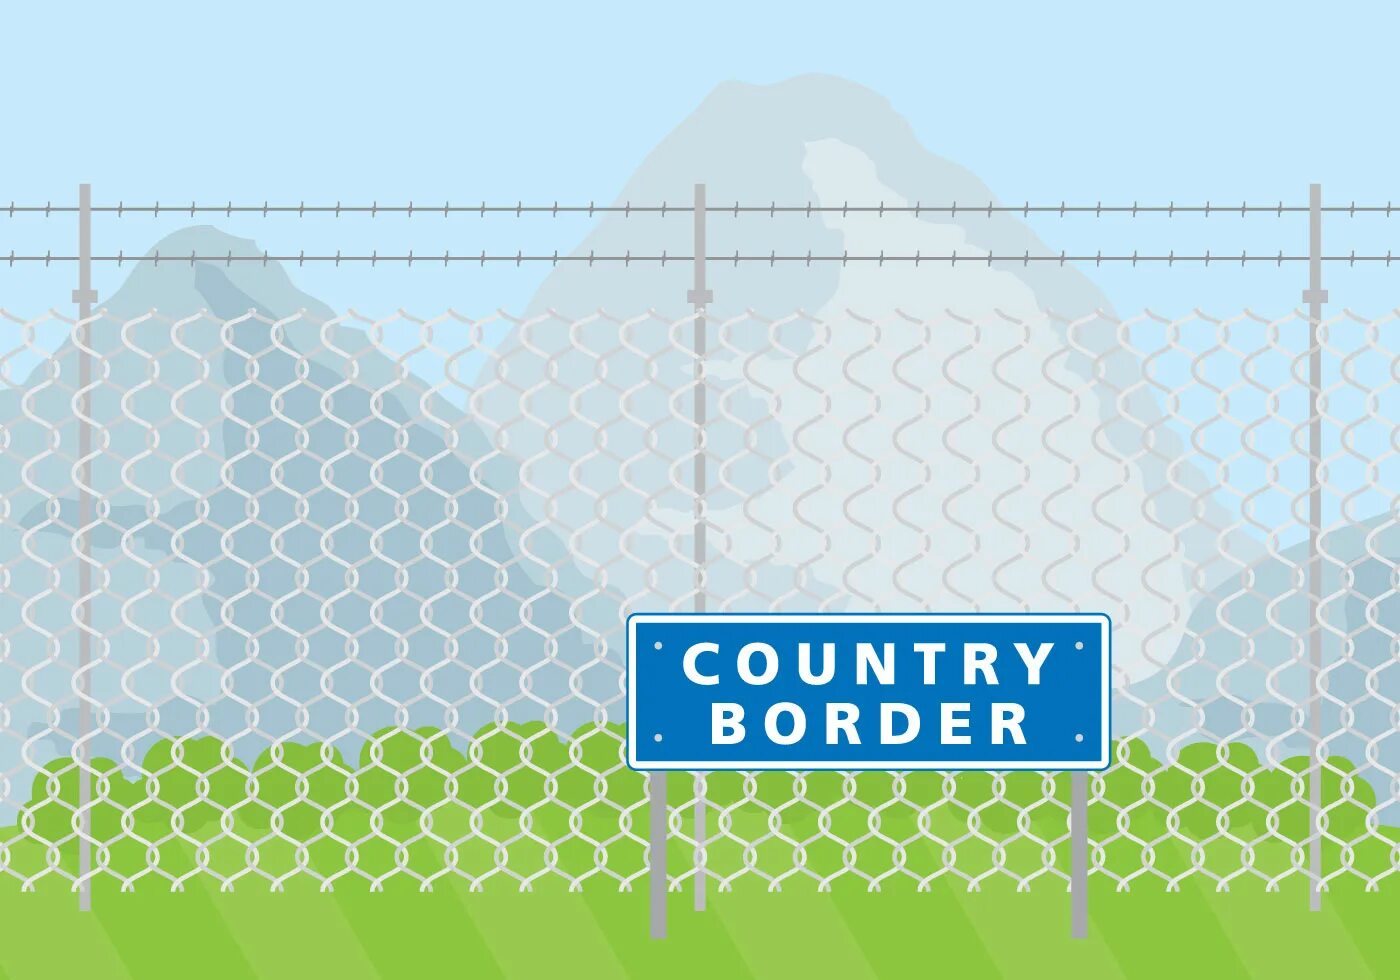 Https border. Country border. Картинки на Country border. Гос граница вектор. Country border vector.